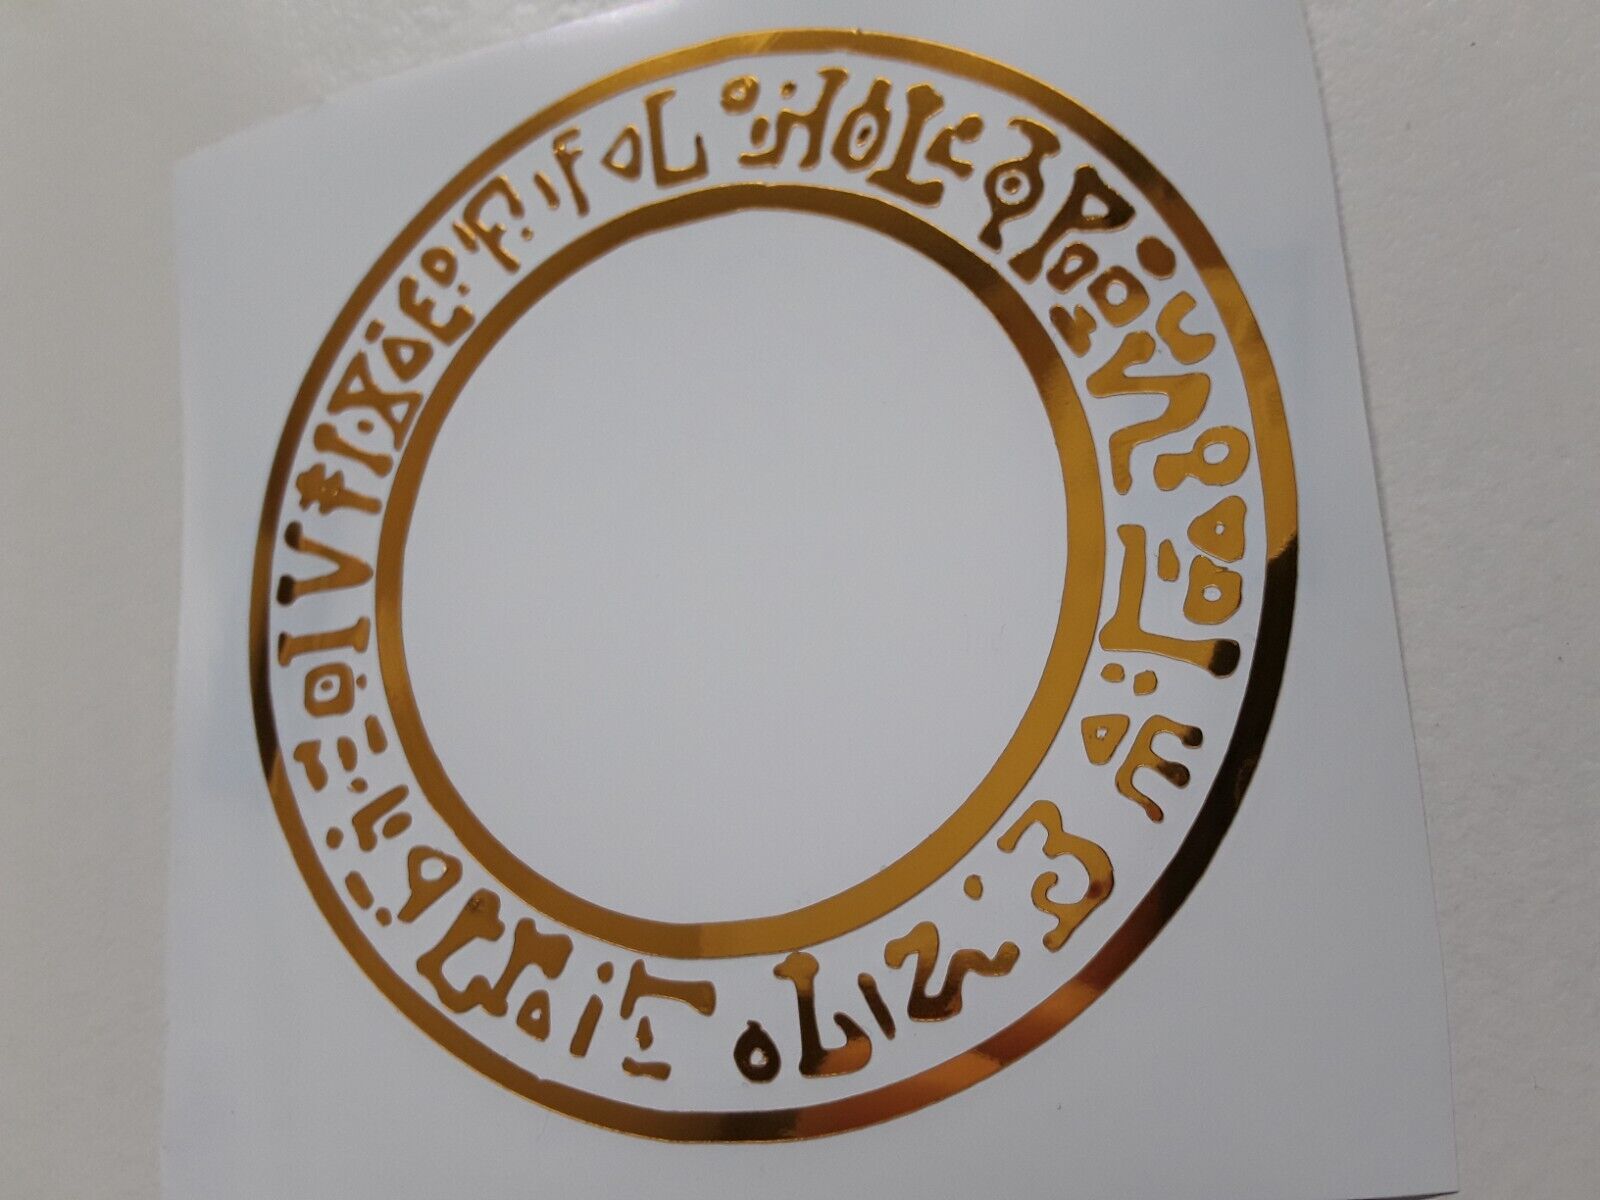 Yugioh Dark Magical Circle Sticker Holo Gold Vinyl Decal Binder Box Waterproof